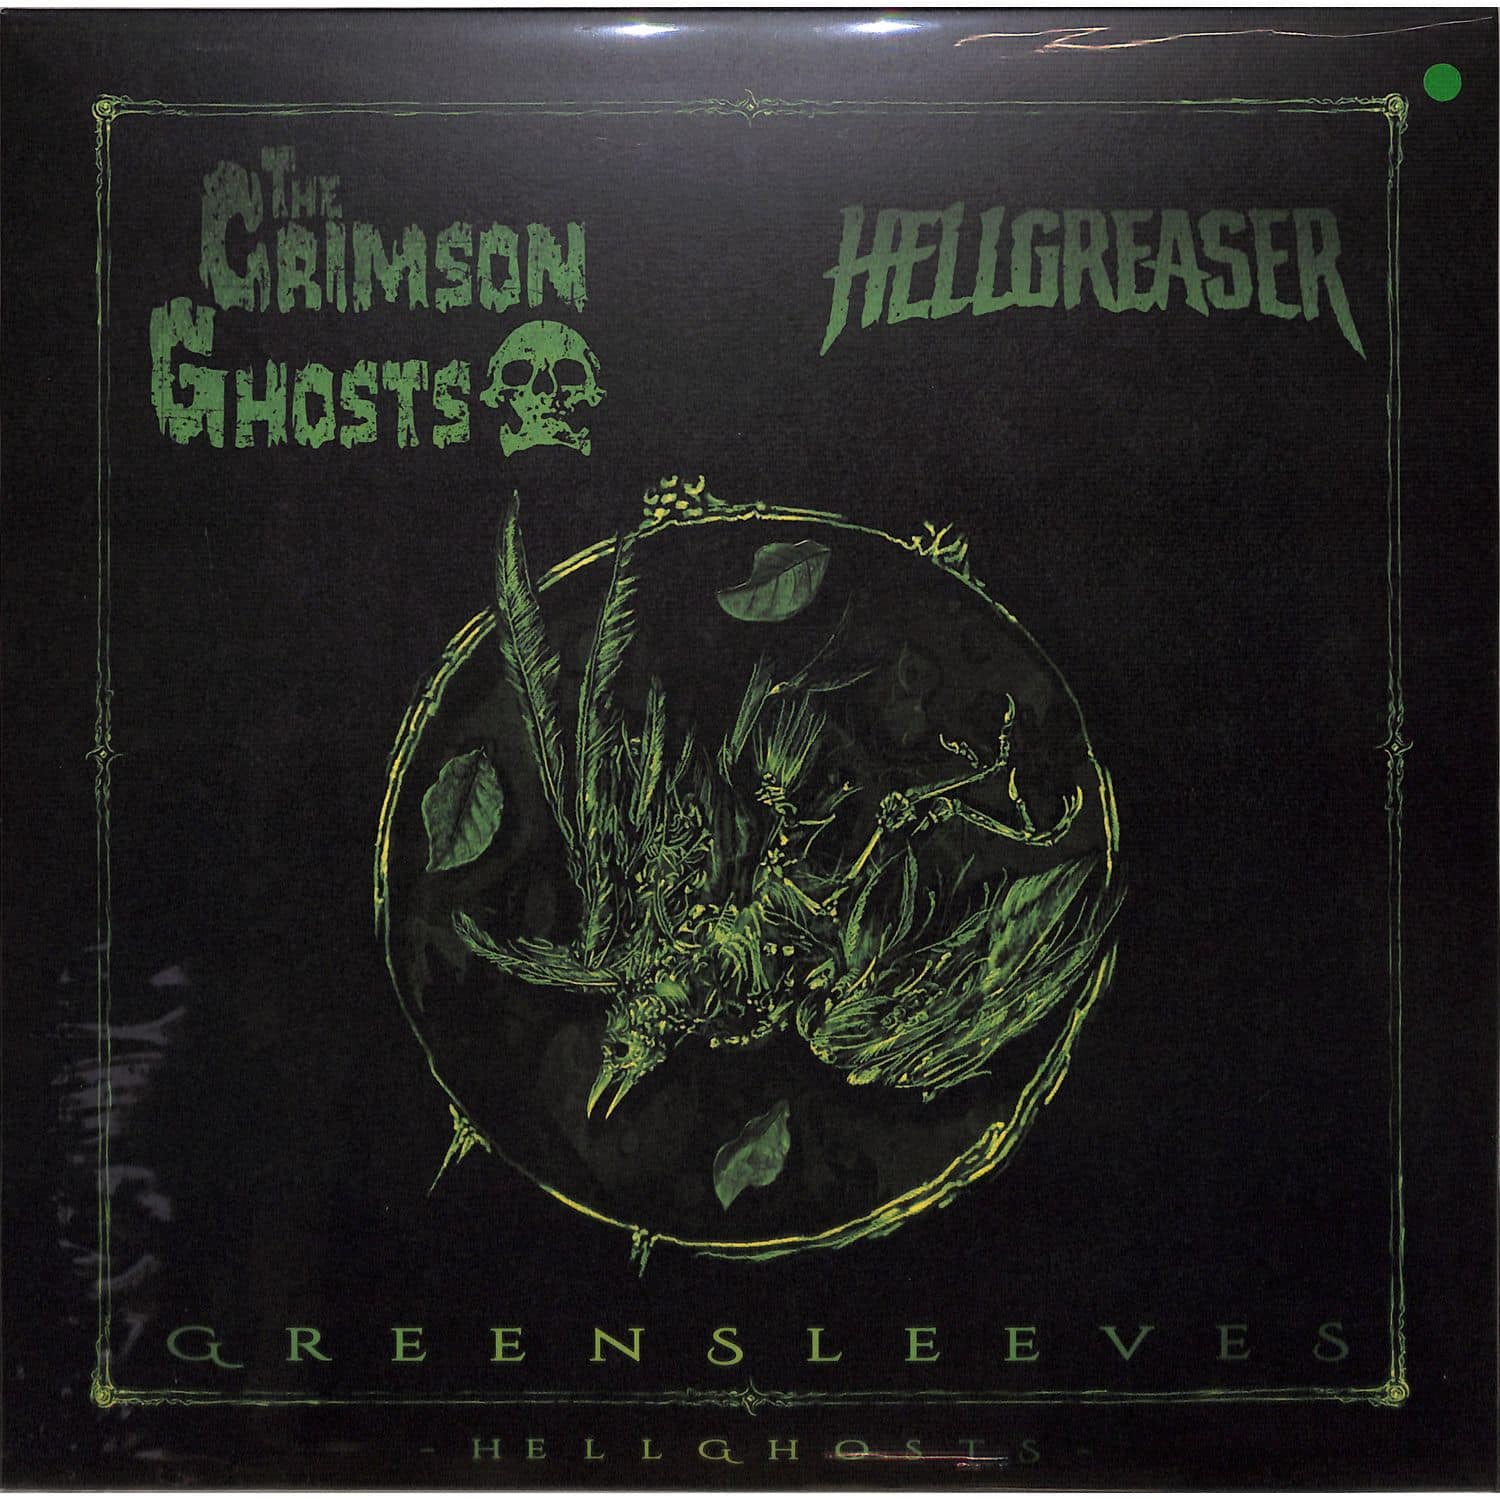 Hellgreaser/the Crimson Ghosts - GREENSLEEVES 